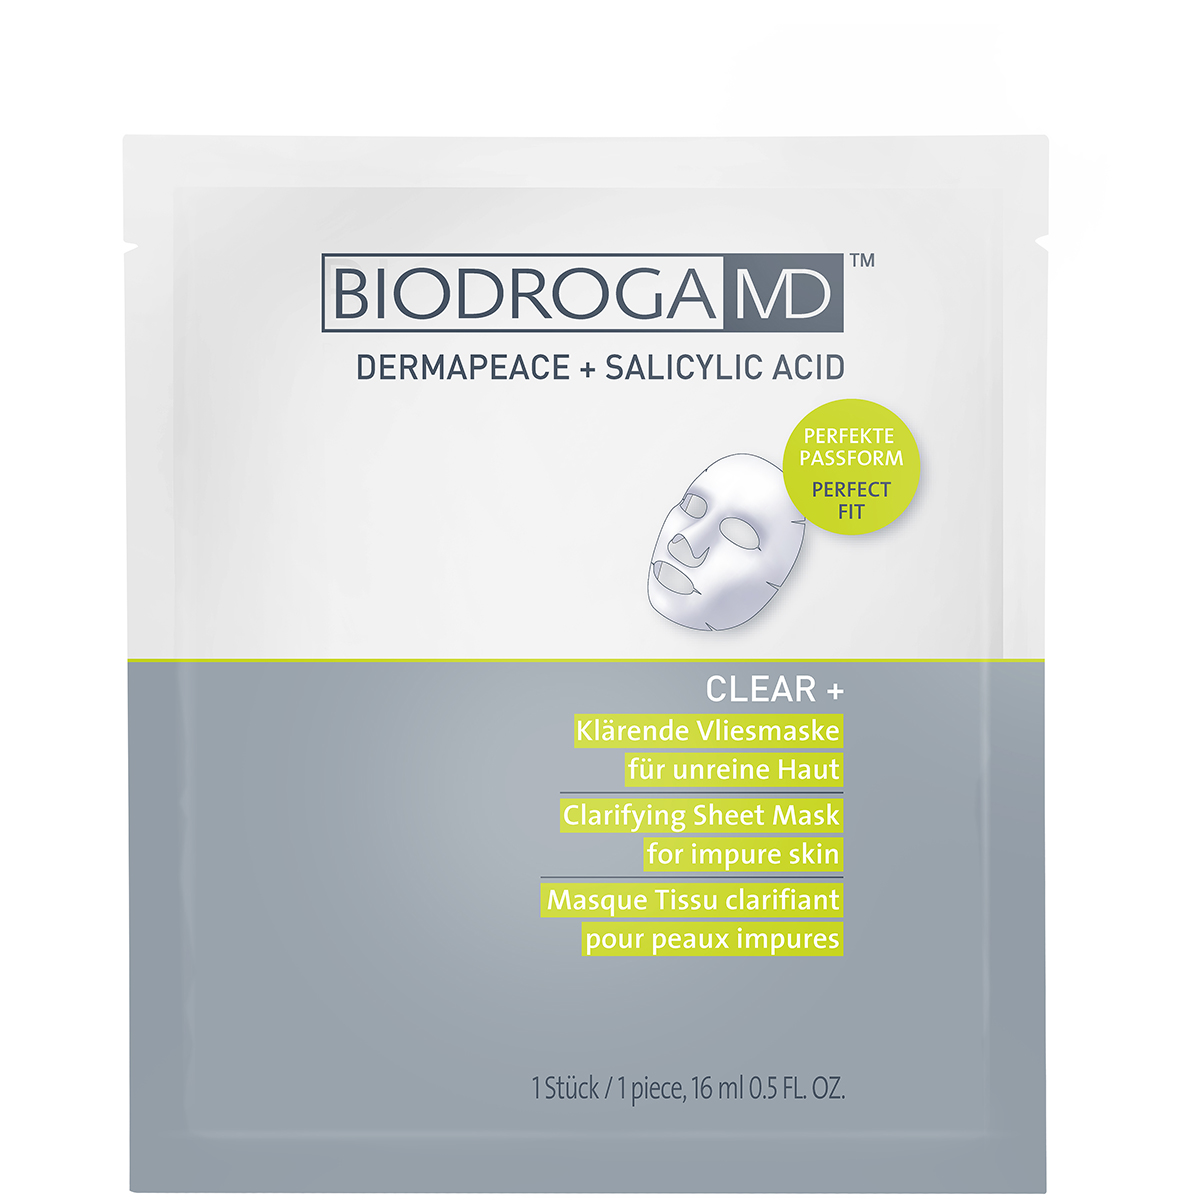 Biodroga Md Clear+ Clarifying Sheet Mask 1st